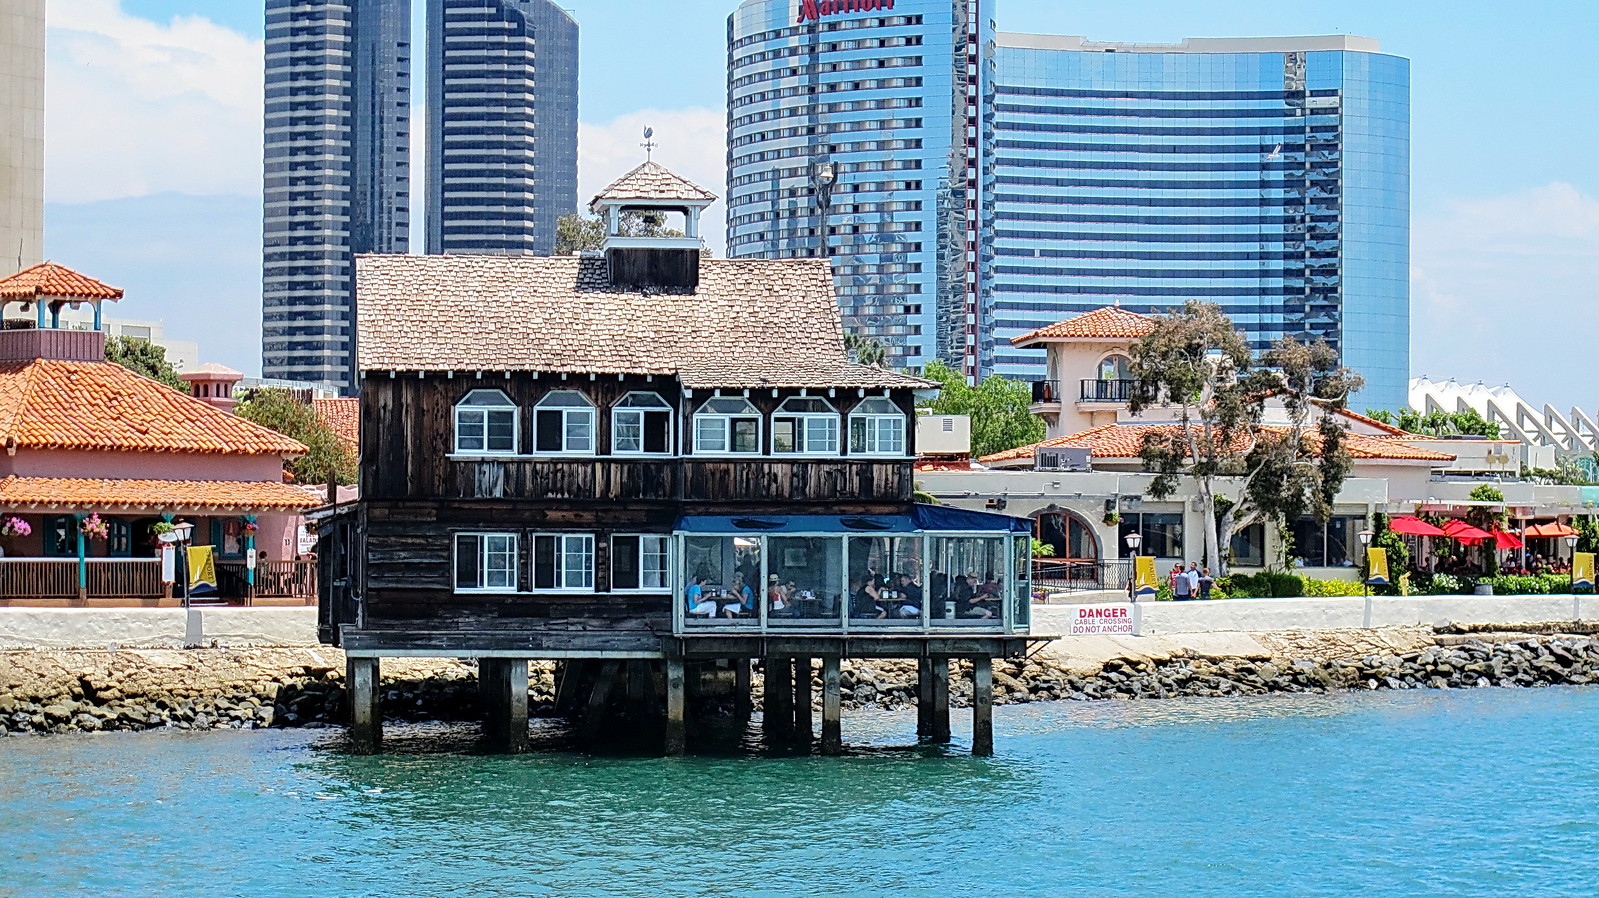 Seaport Village Restaurant from Dock - San Diego, We visite…